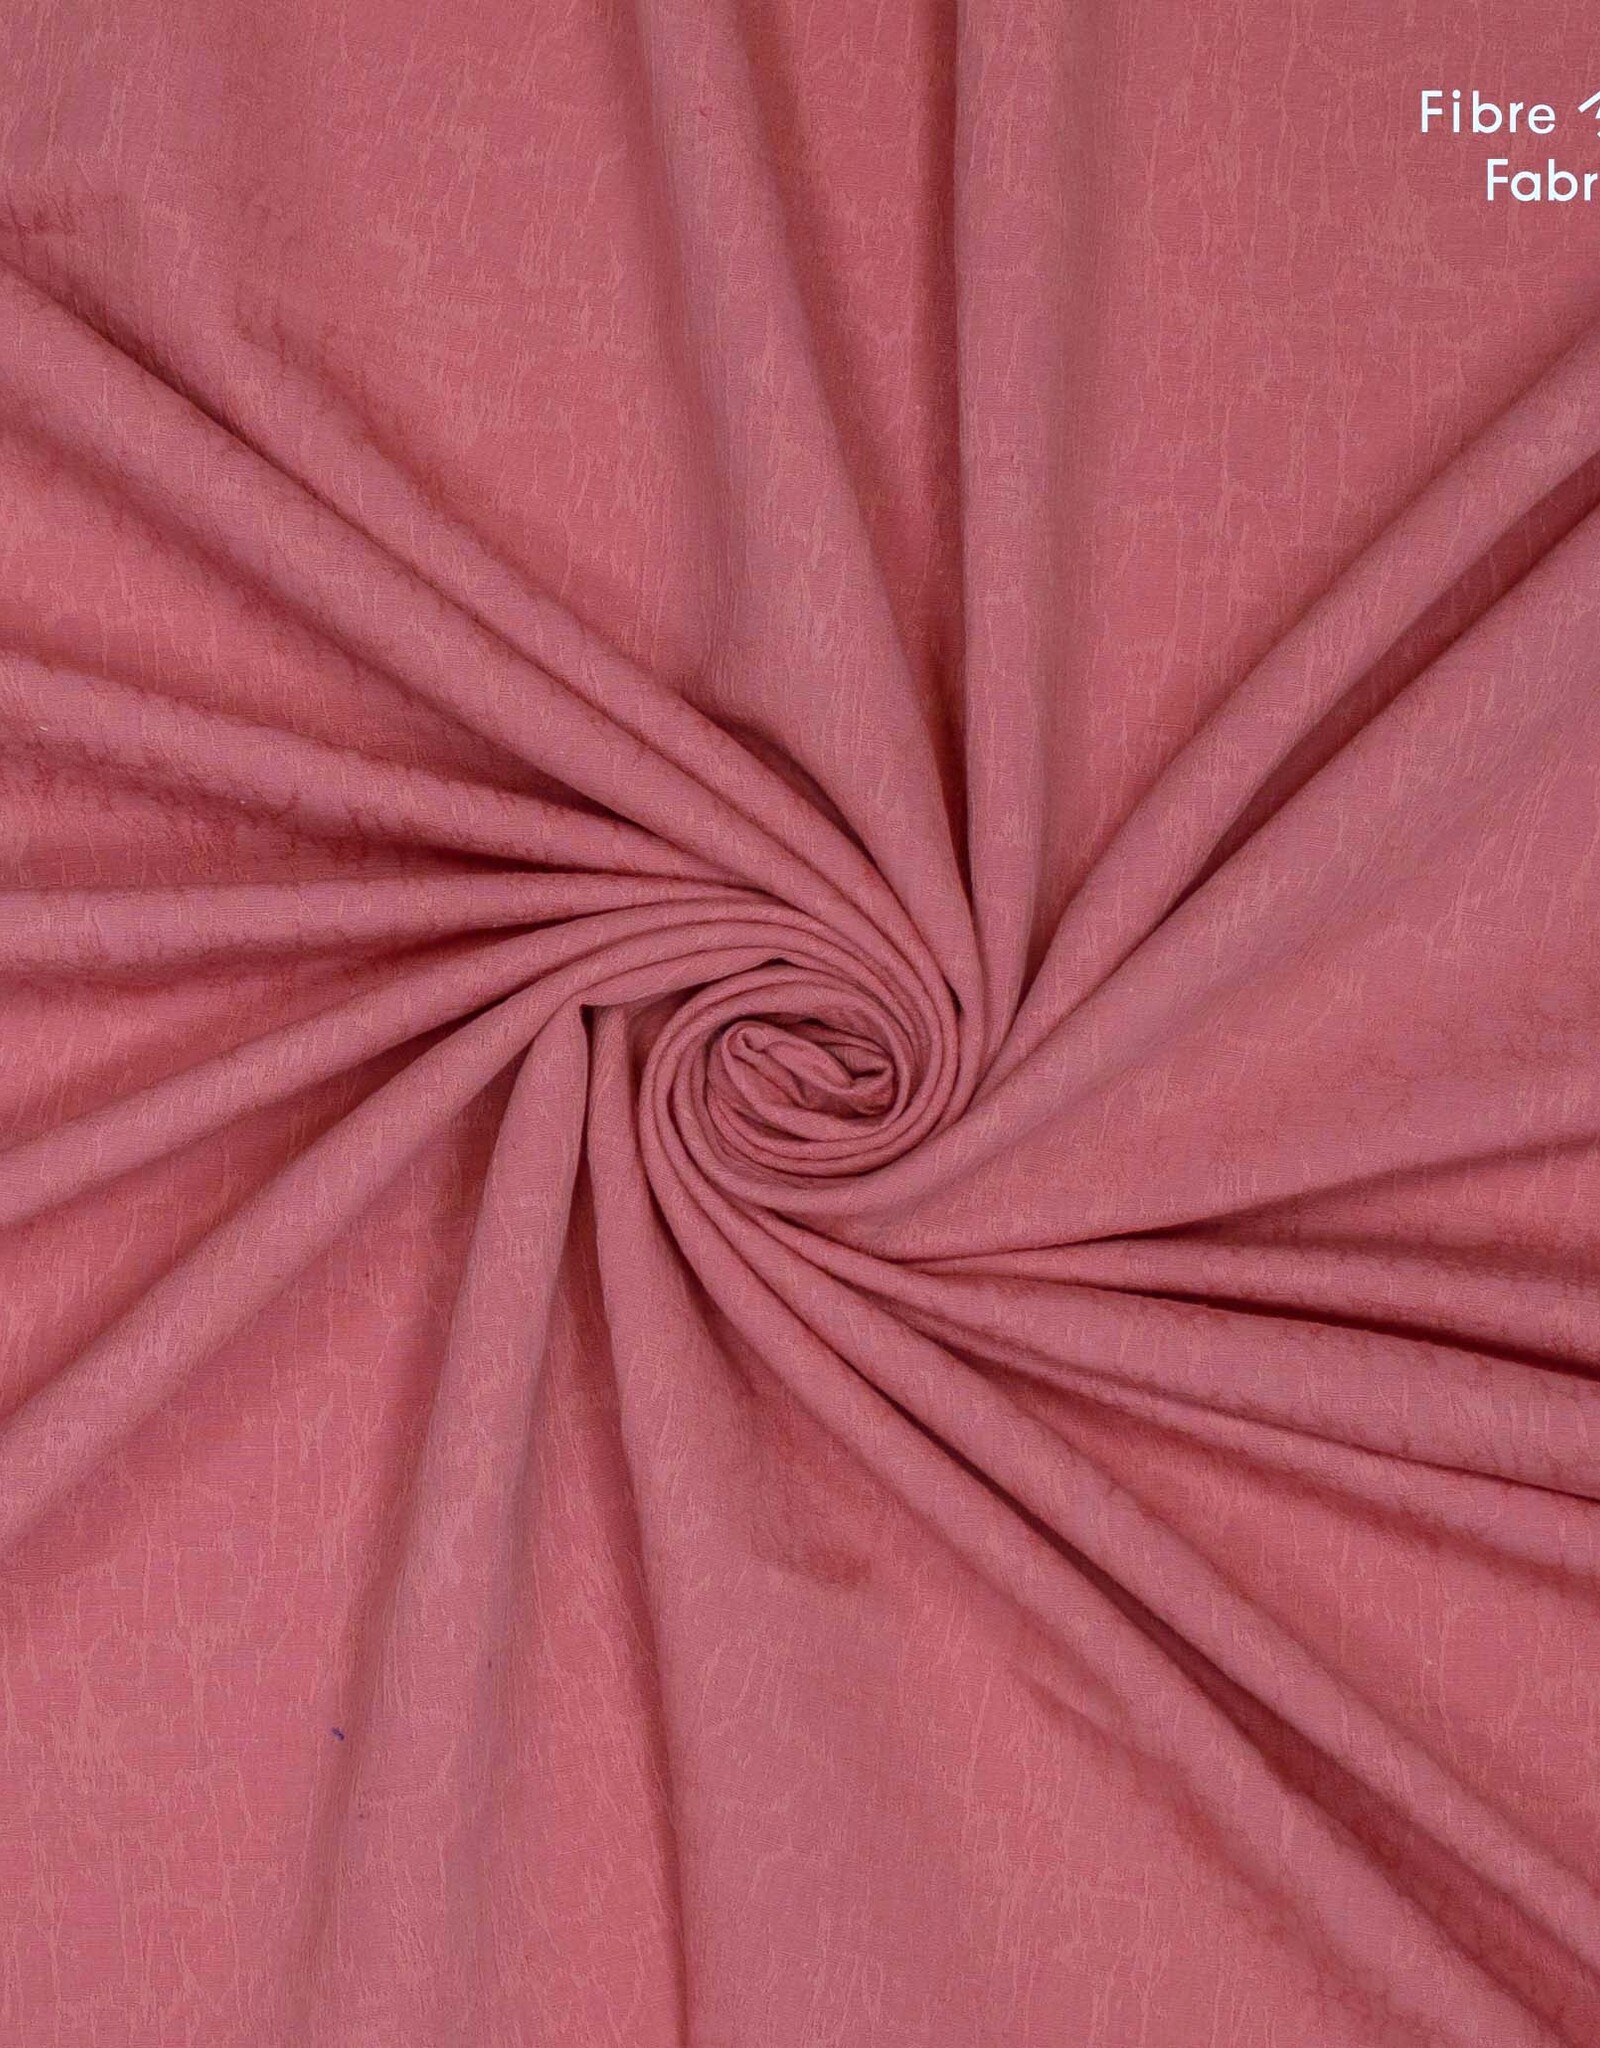 Fibre Mood Woven Jacquard - Nikka - Soft Pink